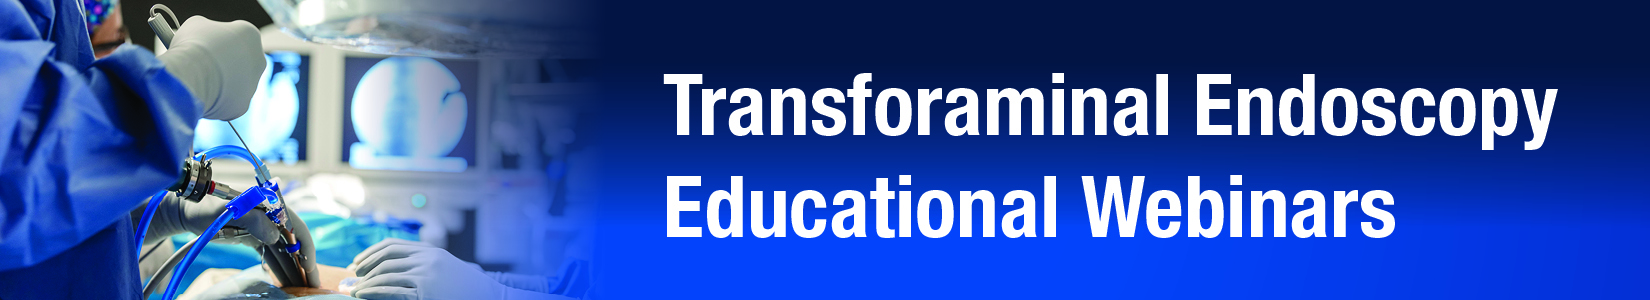 Transforaminal educational Webinars